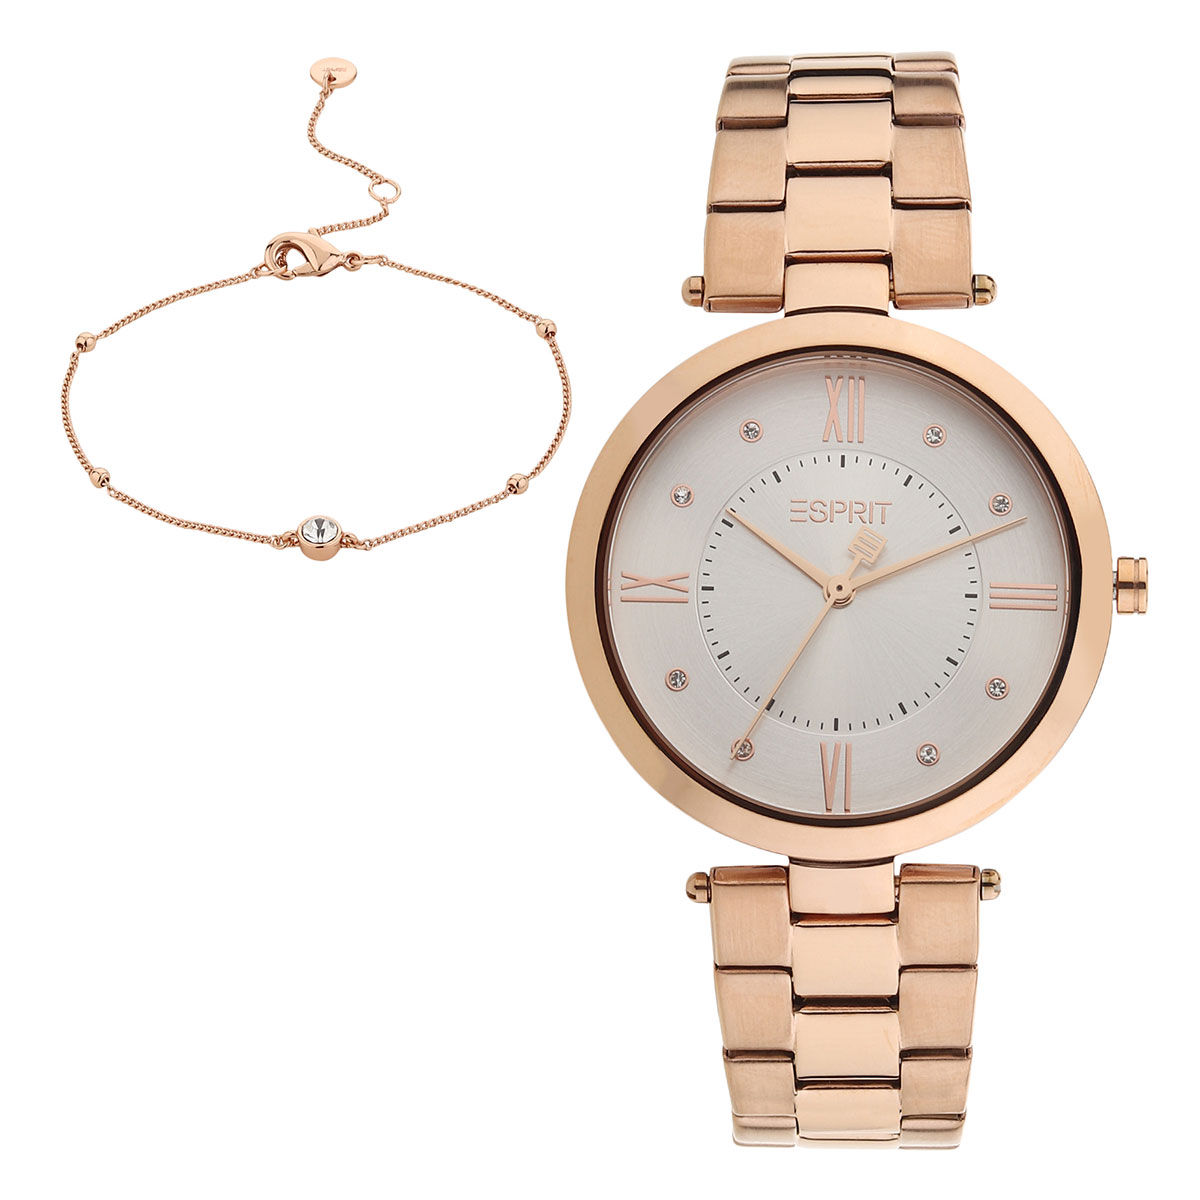 Esprit Men´s Watch Varic Red $132 #Esprit #watch #watches #style  #chronograph steel case with plastic bracelet and quartz movement | Watches,  Esprit, Casio watch